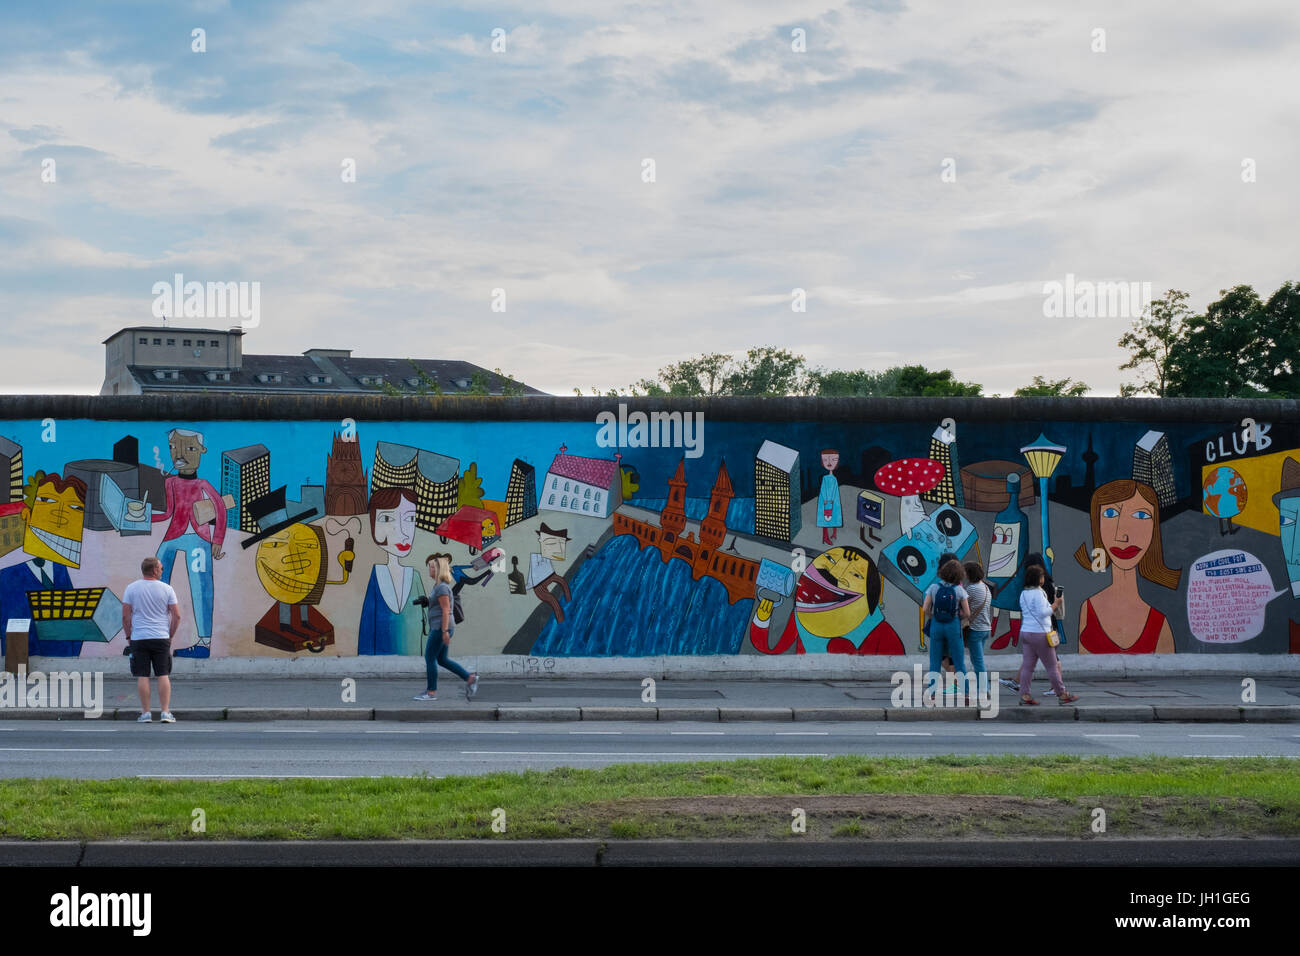 Berlin, Germany - July 11, 2017: People at the Berlin Wall / East Side Gallery in Berlin, Germany. Stock Photo